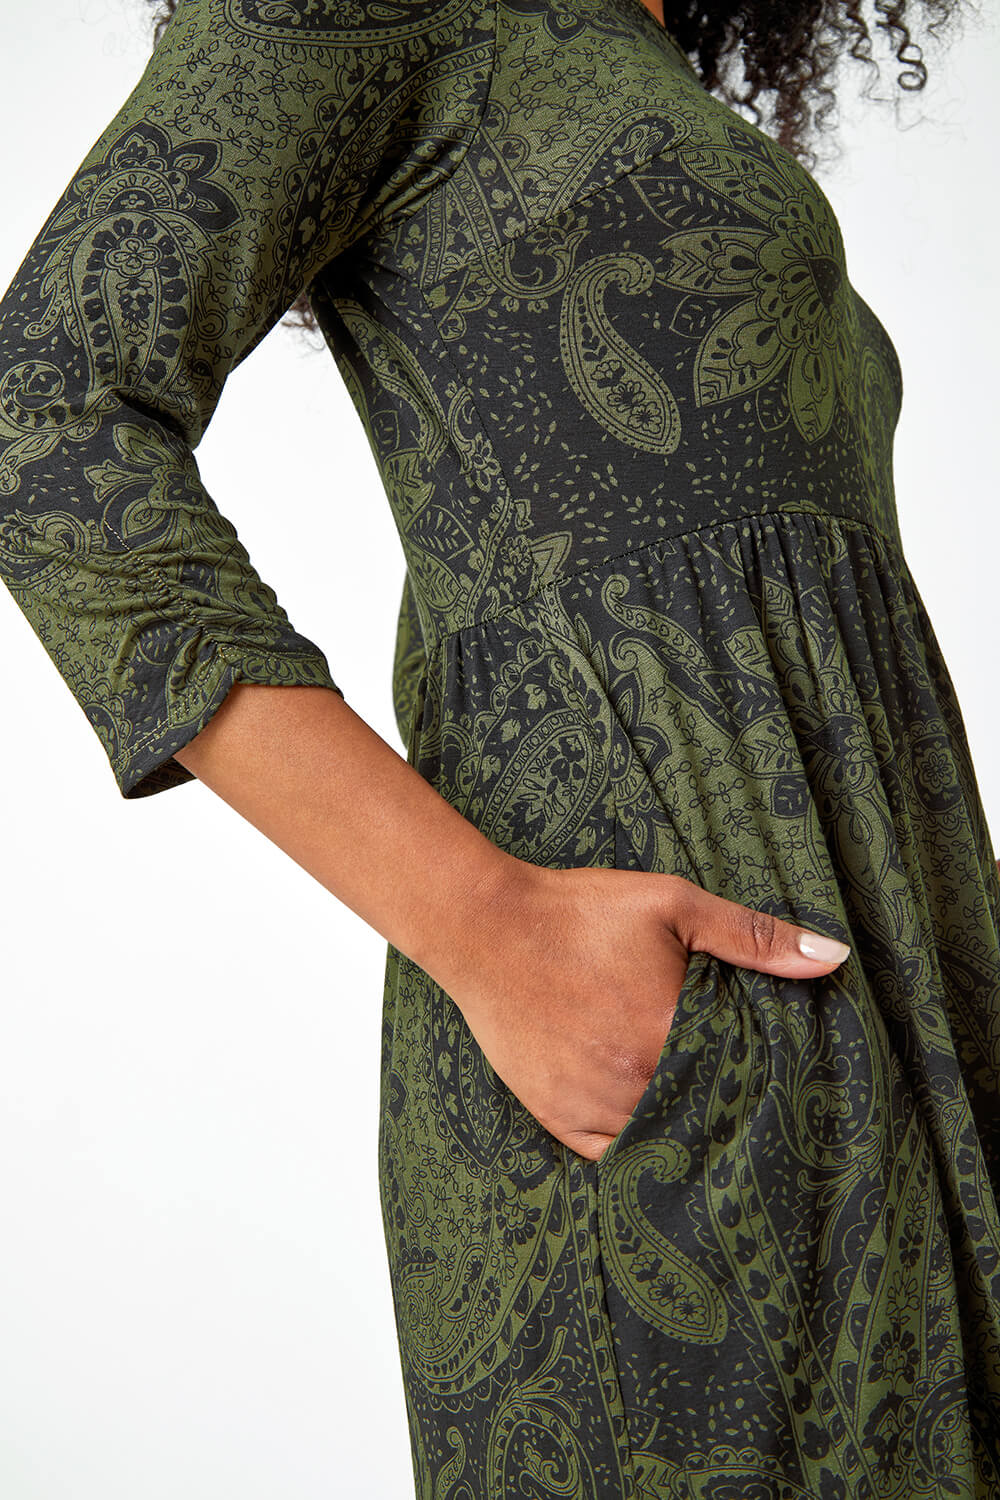 KHAKI Petite Paisley Print Ruched Midi Dress, Image 5 of 5